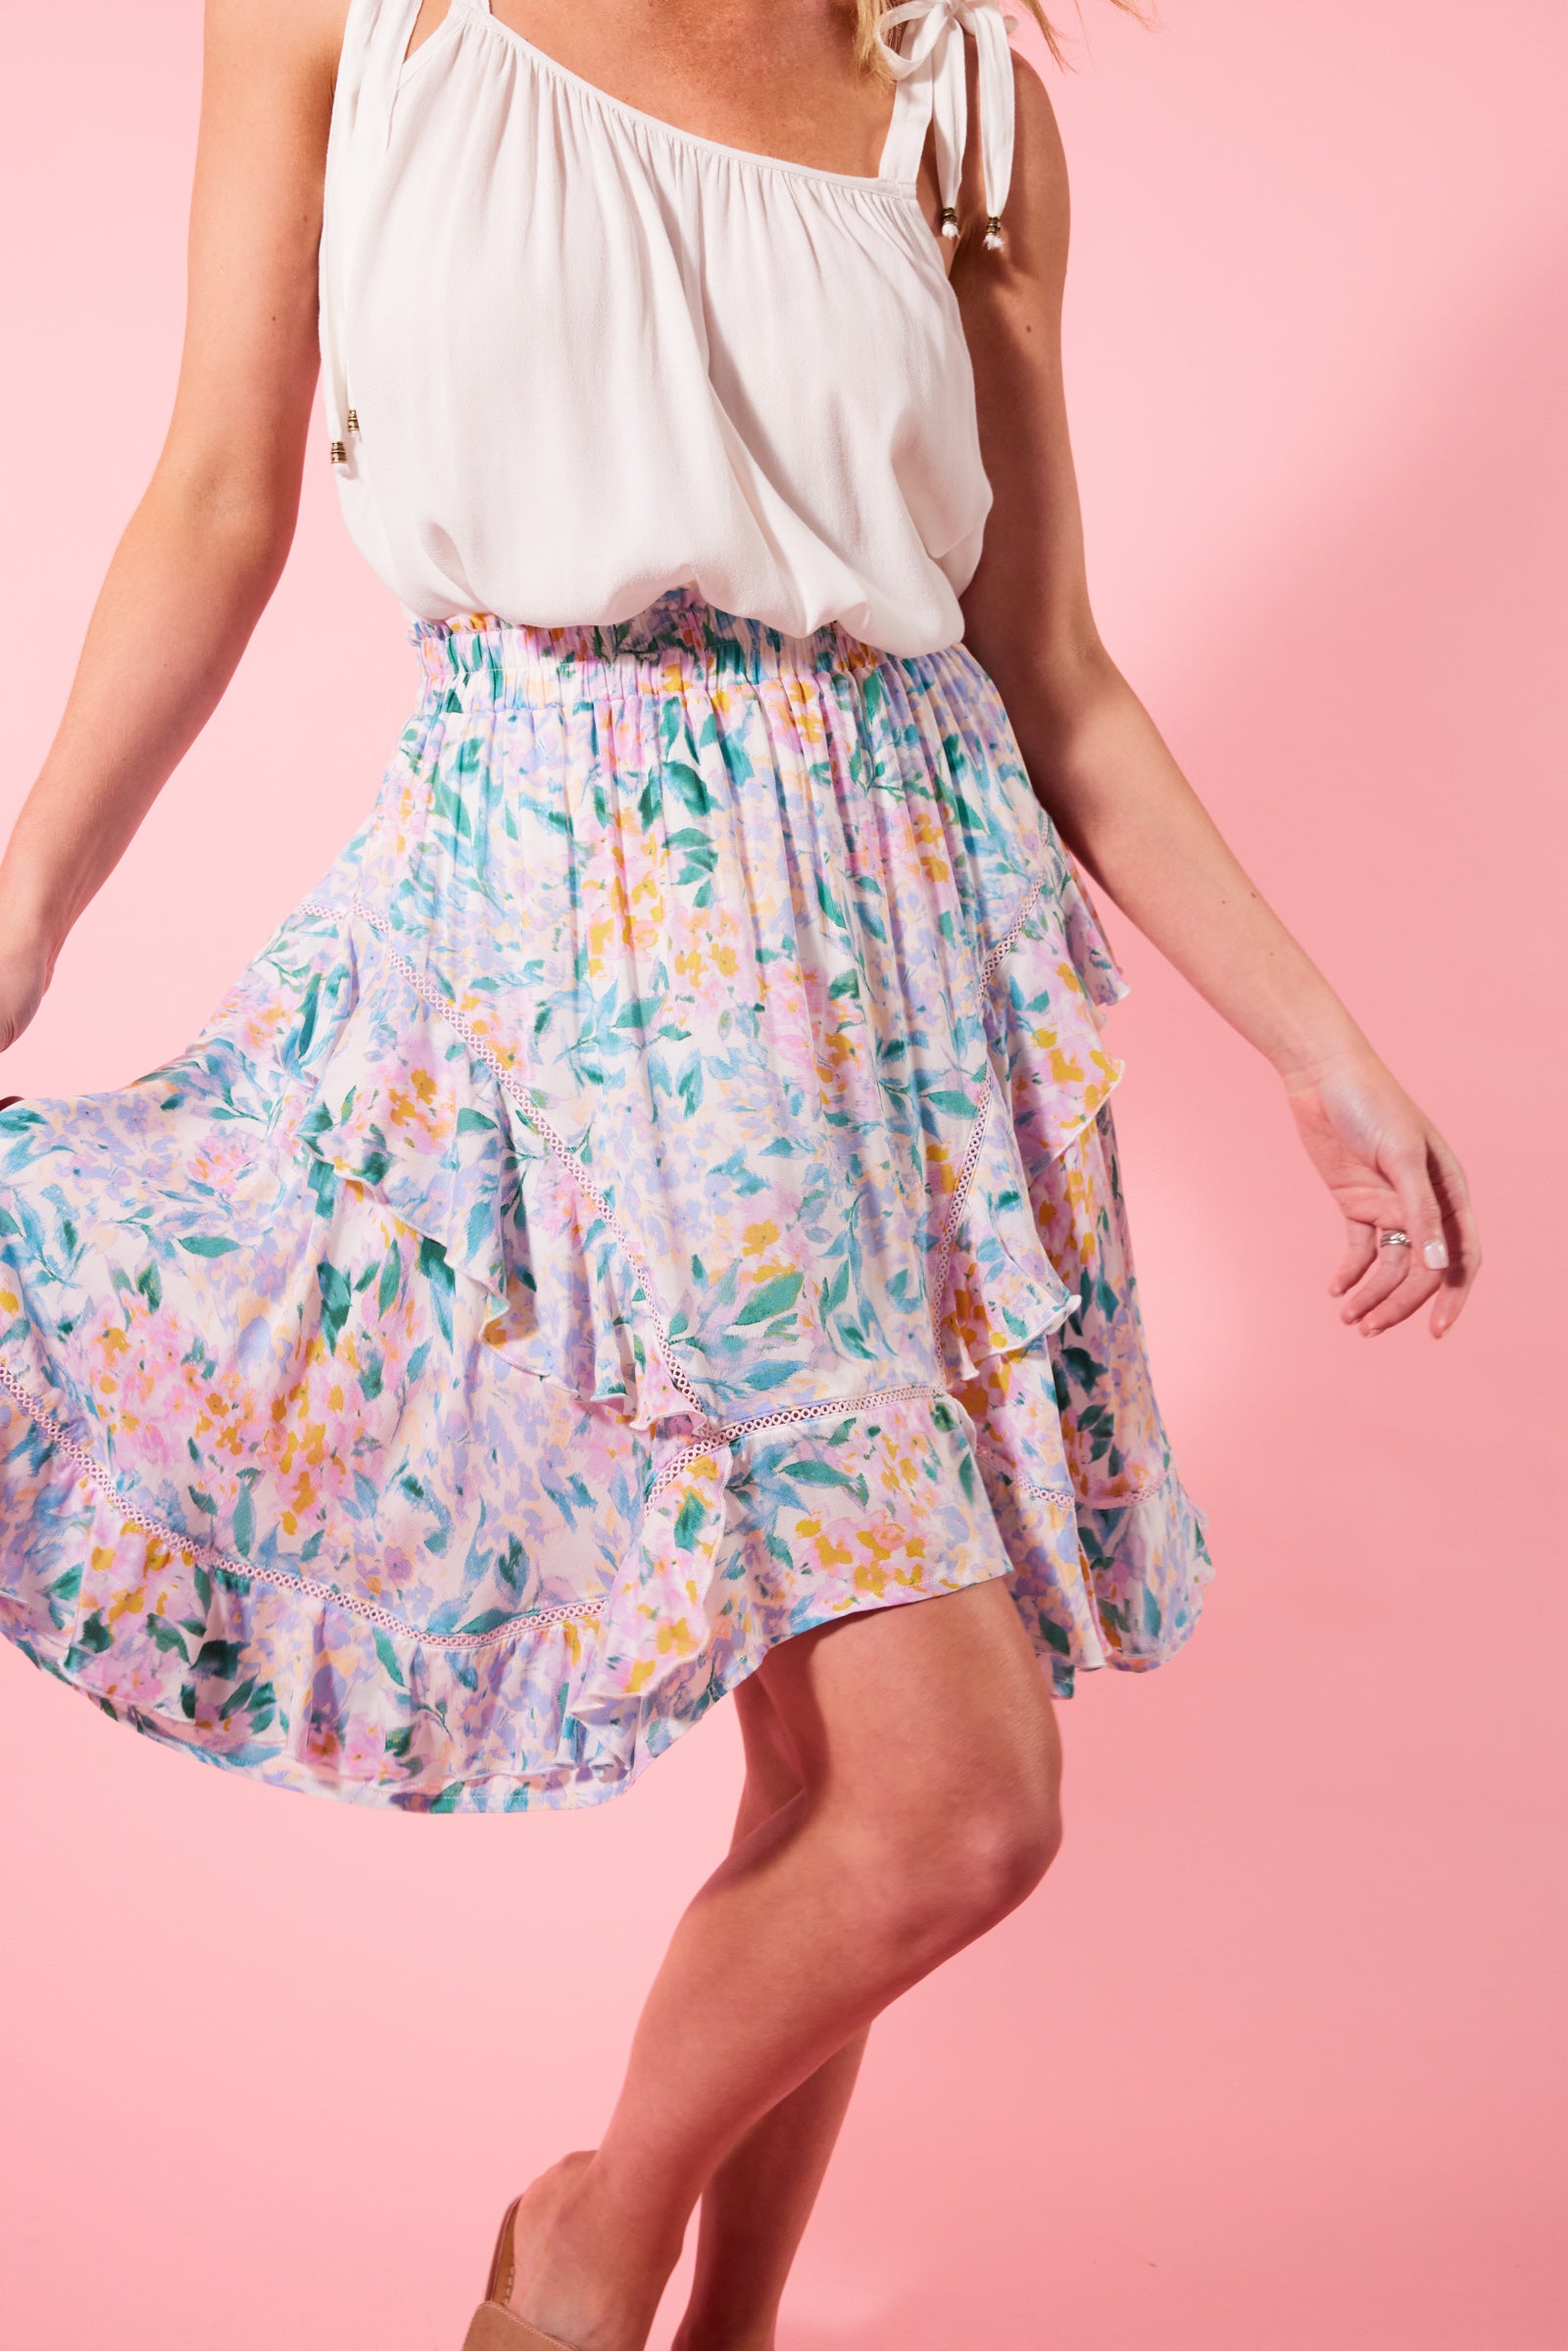 Botanical Skirt - Salt Hydrangea - Isle of Mine Clothing - Skirt Mini